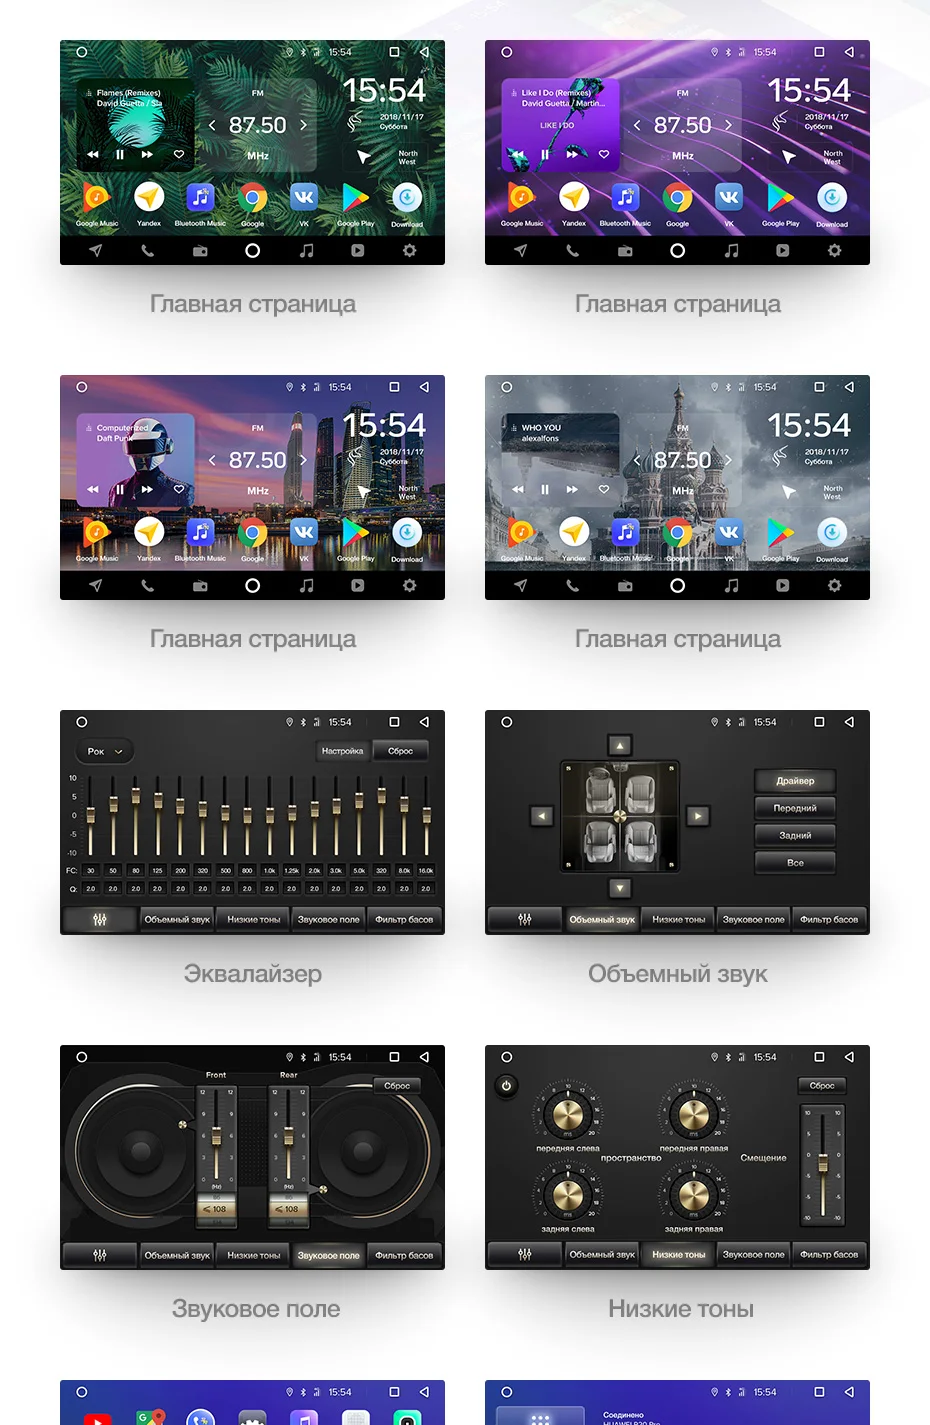 TEYES SPRO Штатная магнитола для Хендай Элантра 6 Hyundai Elantra 6 Android 8.1, до 8-ЯДЕР, до 4+ 64ГБ 32EQ+ DSP 2DIN автомагнитола 2 DIN DVD GPS мультимедиа автомобиля головное устройство